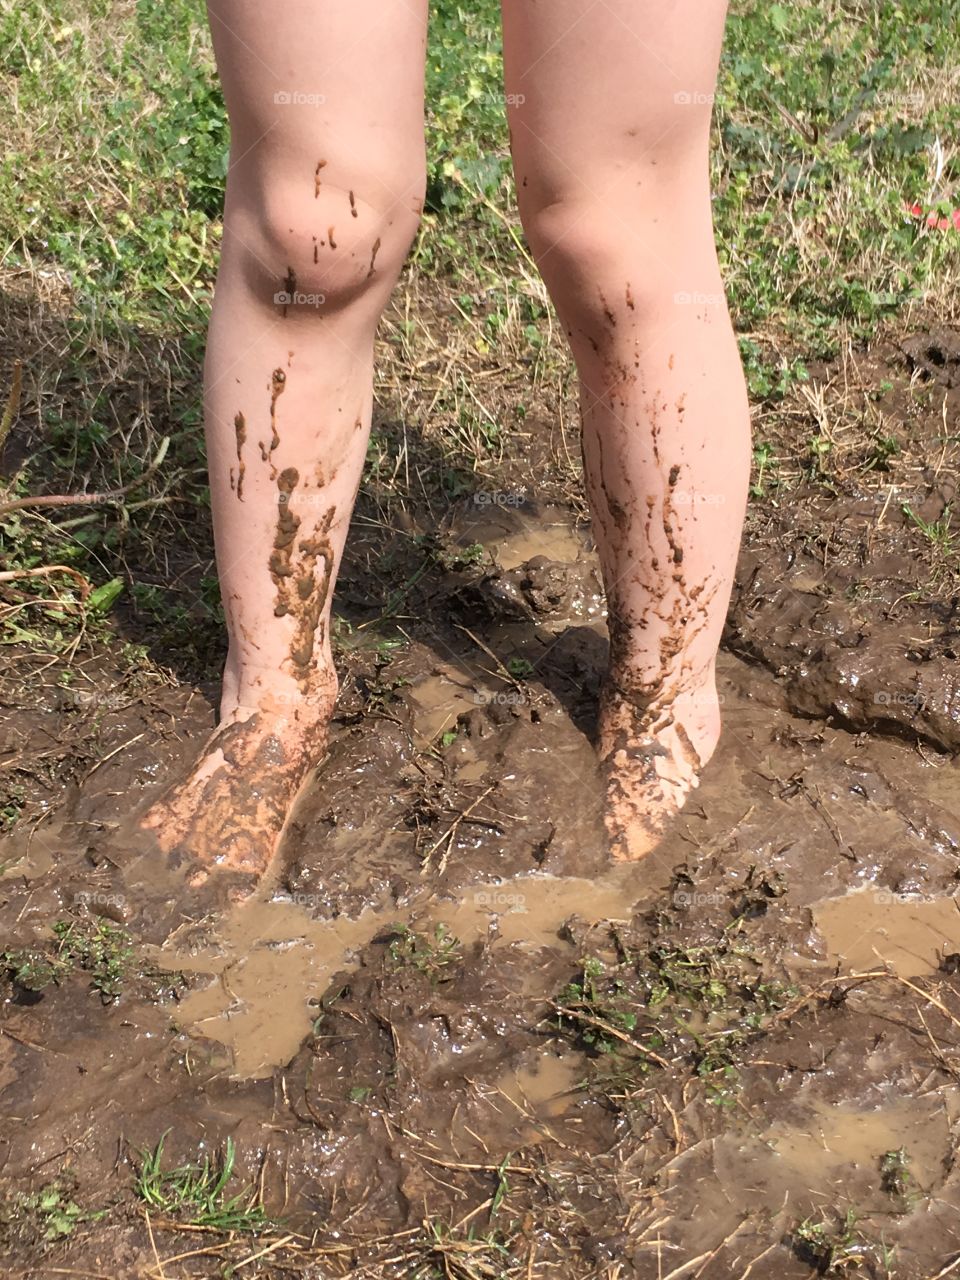 Muddy legs!